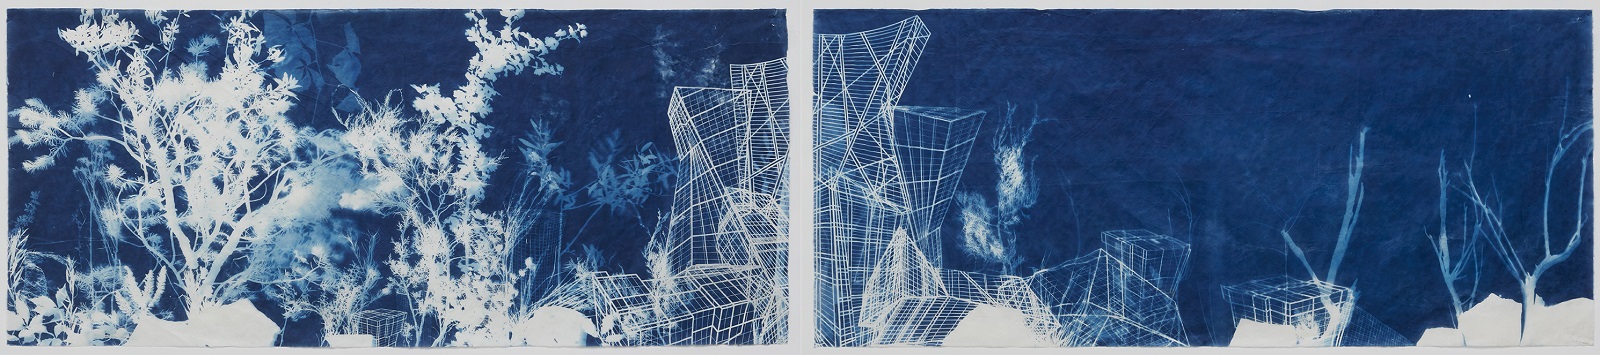 Nicola López; NeverWild (diptych); 2021; cyanotype on mulberry paper; each panel 39 x 91 in.; photo by Alan Wiener